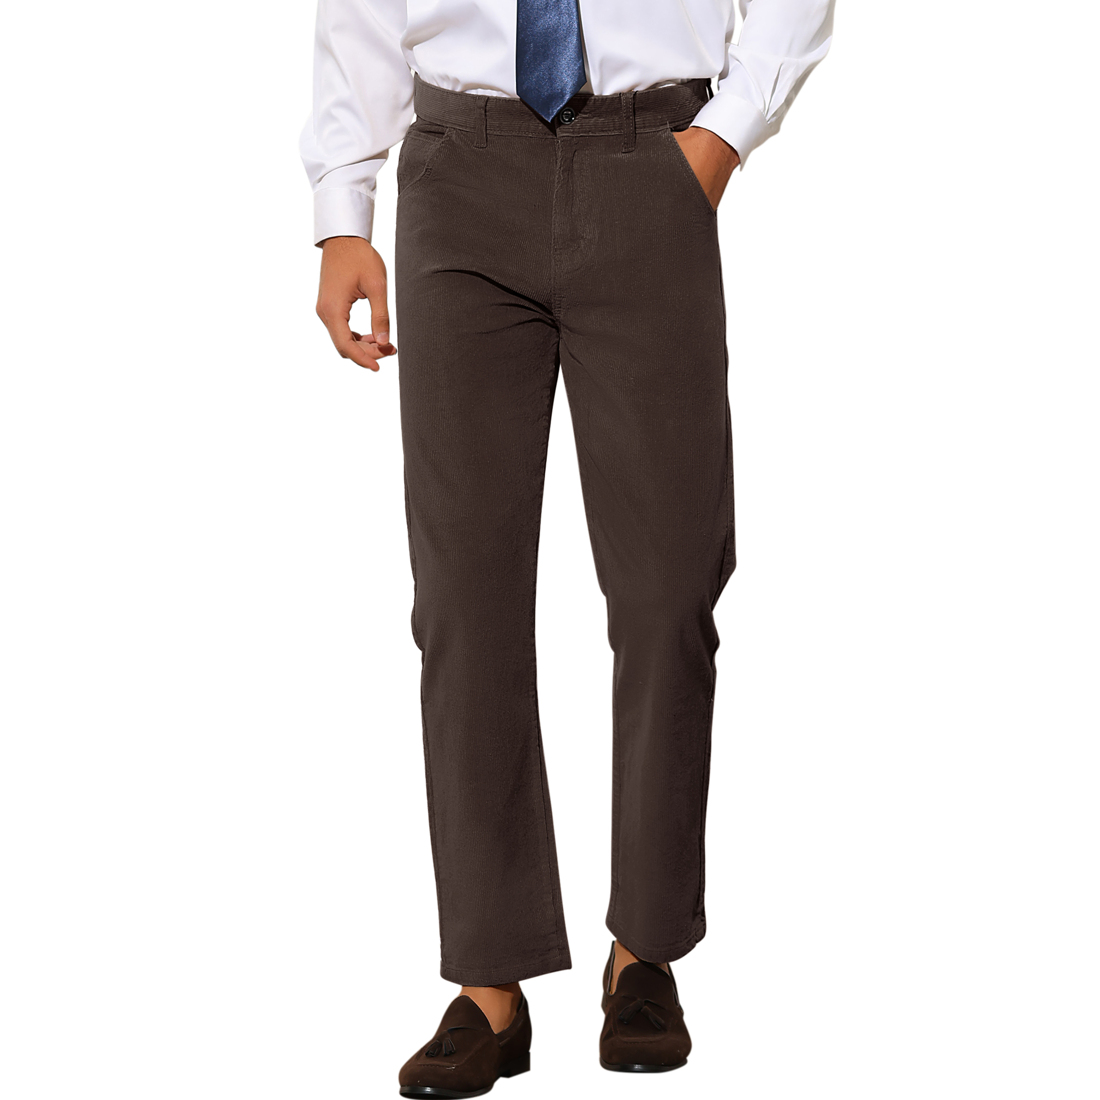 Unique Bargains Corduroy Dress Pants for Men's Straight Fit Flat Front Work Office Trousers